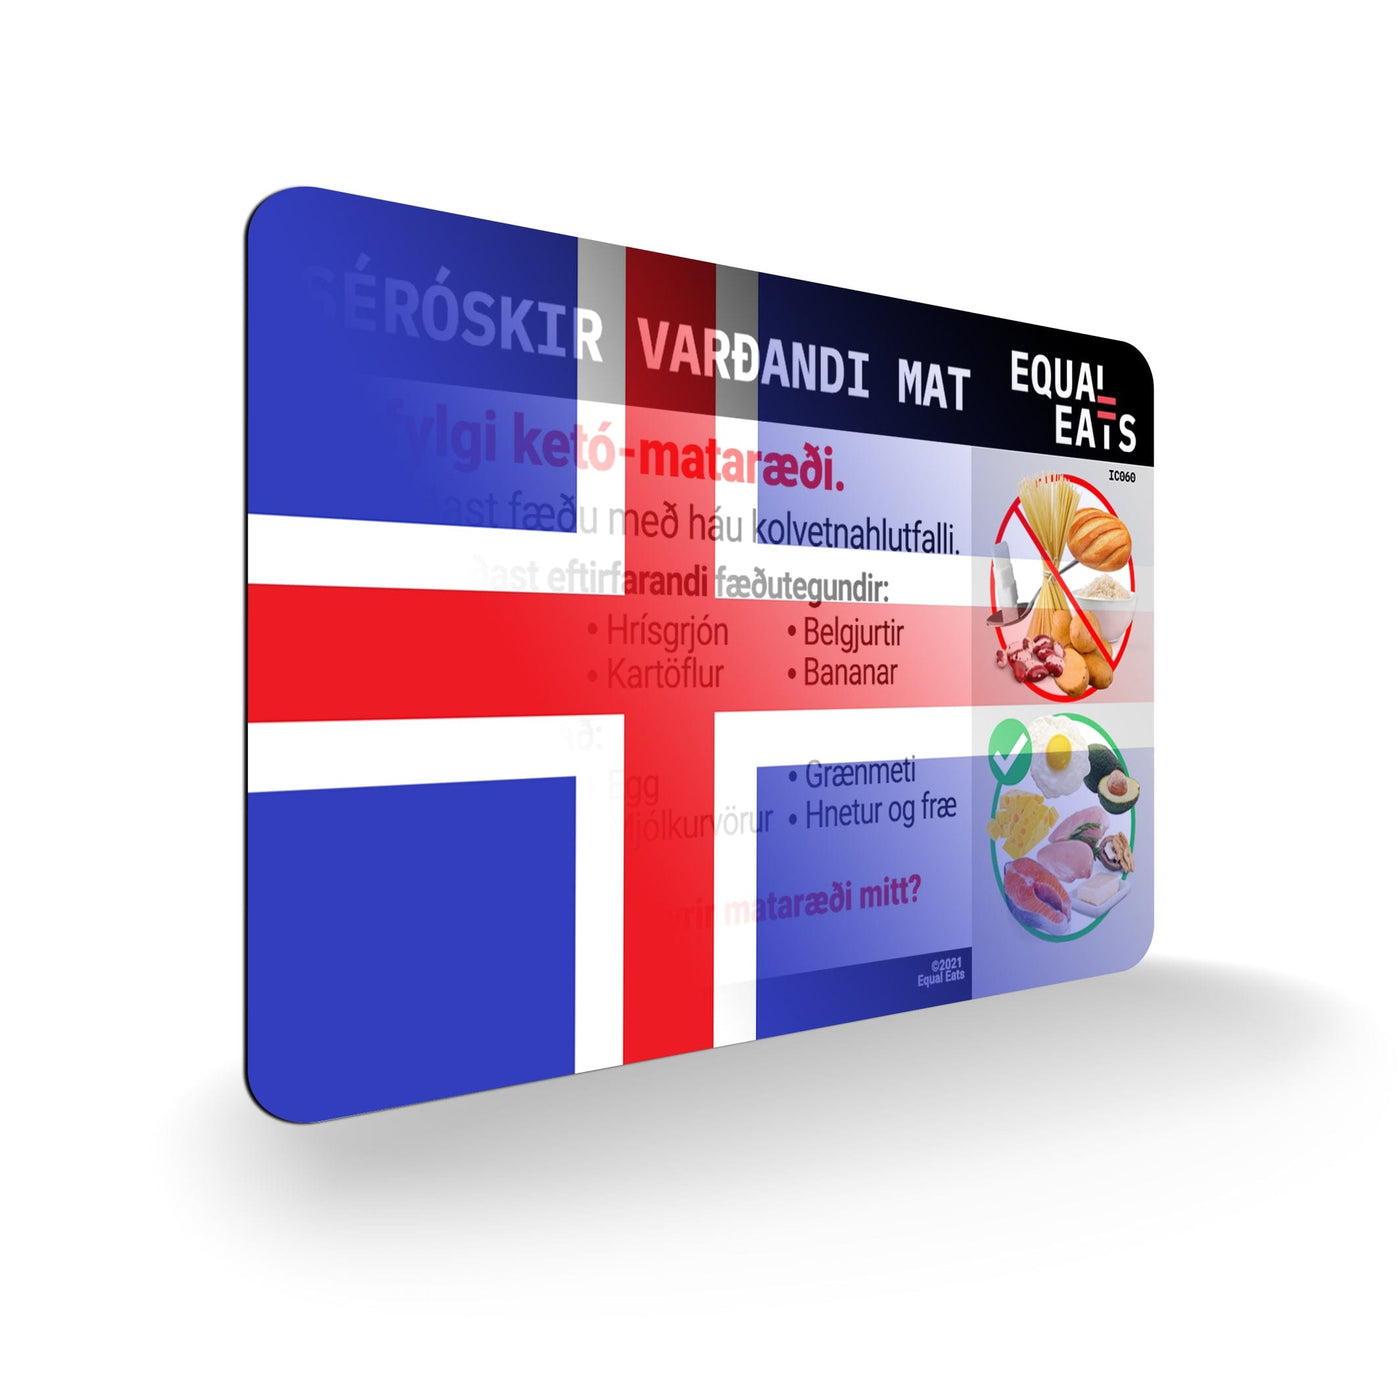 Icelandic Keto Diet Card